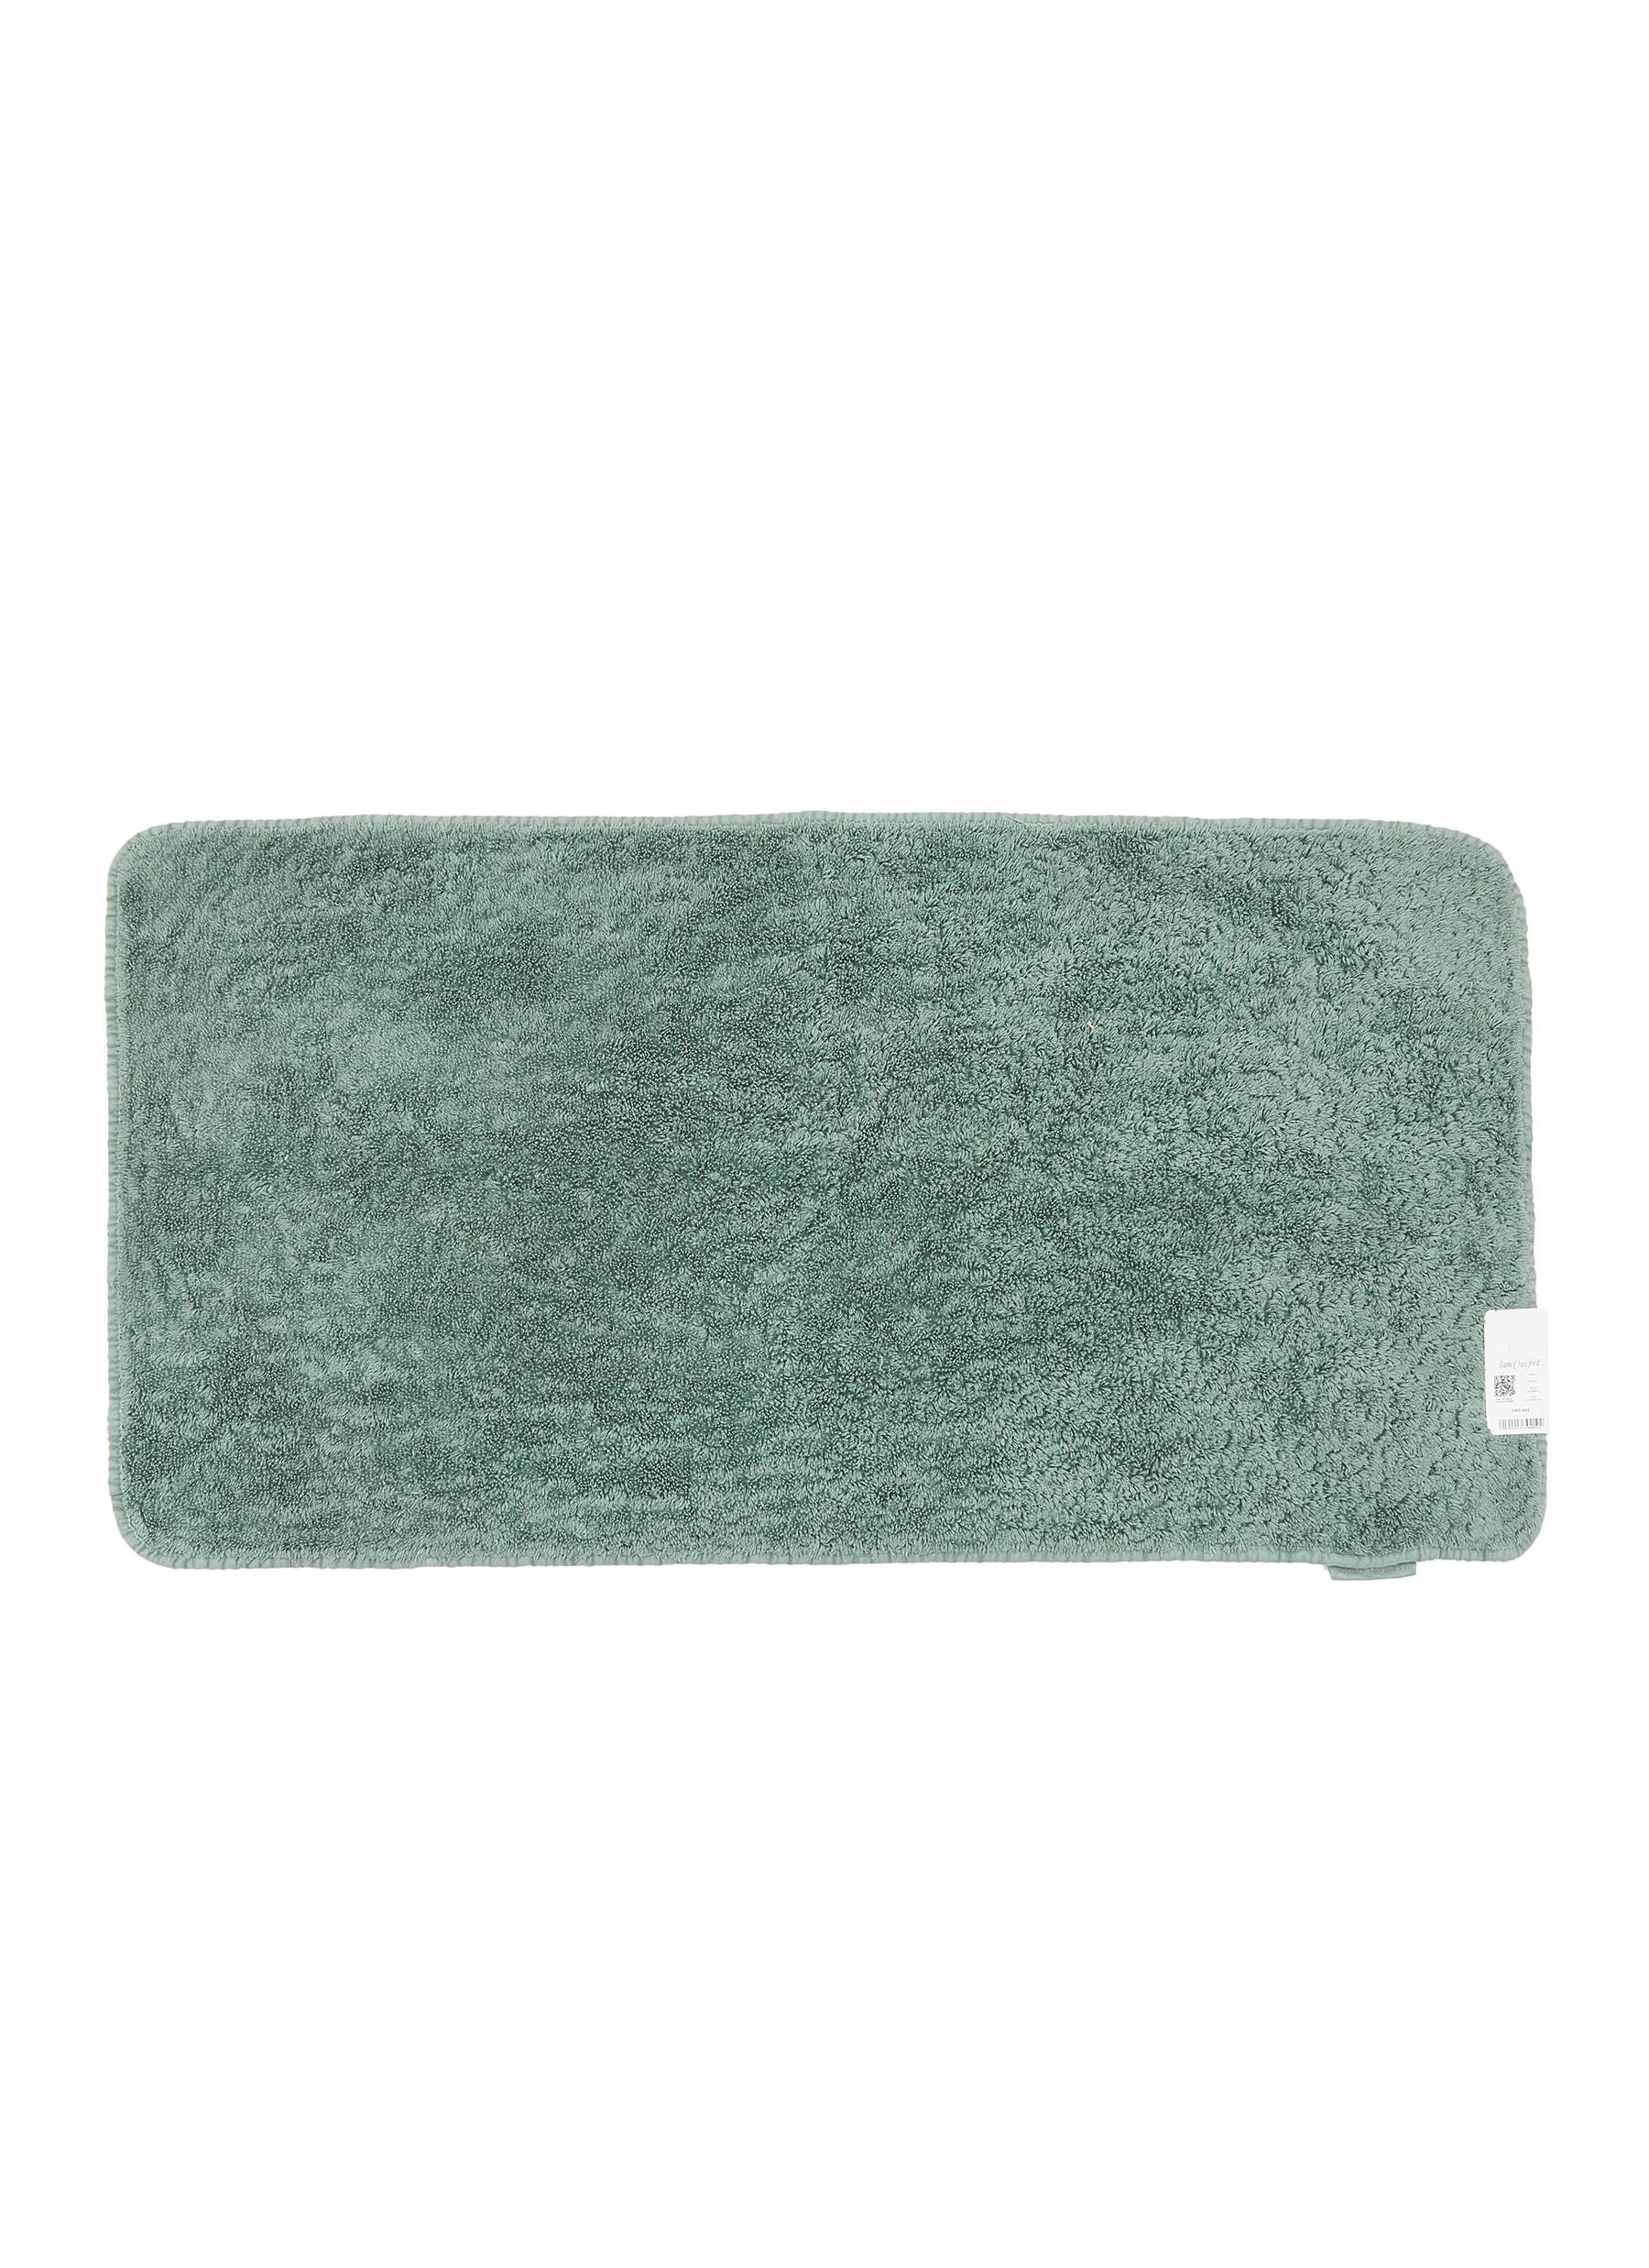 Super pile guest towel - Evergreen